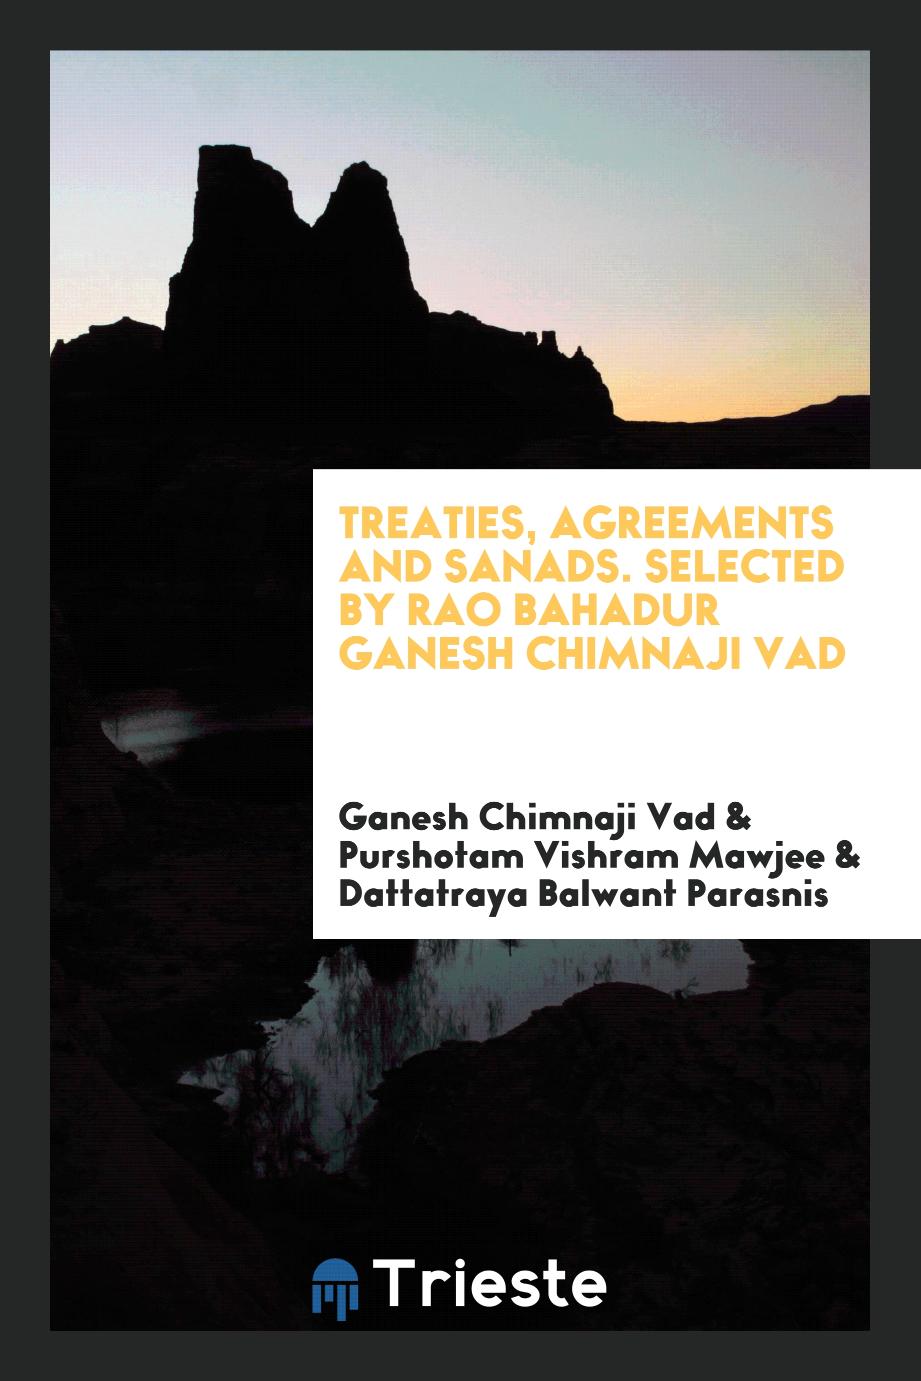 Treaties, agreements and sanads. Selected by Rao Bahadur Ganesh Chimnaji Vad